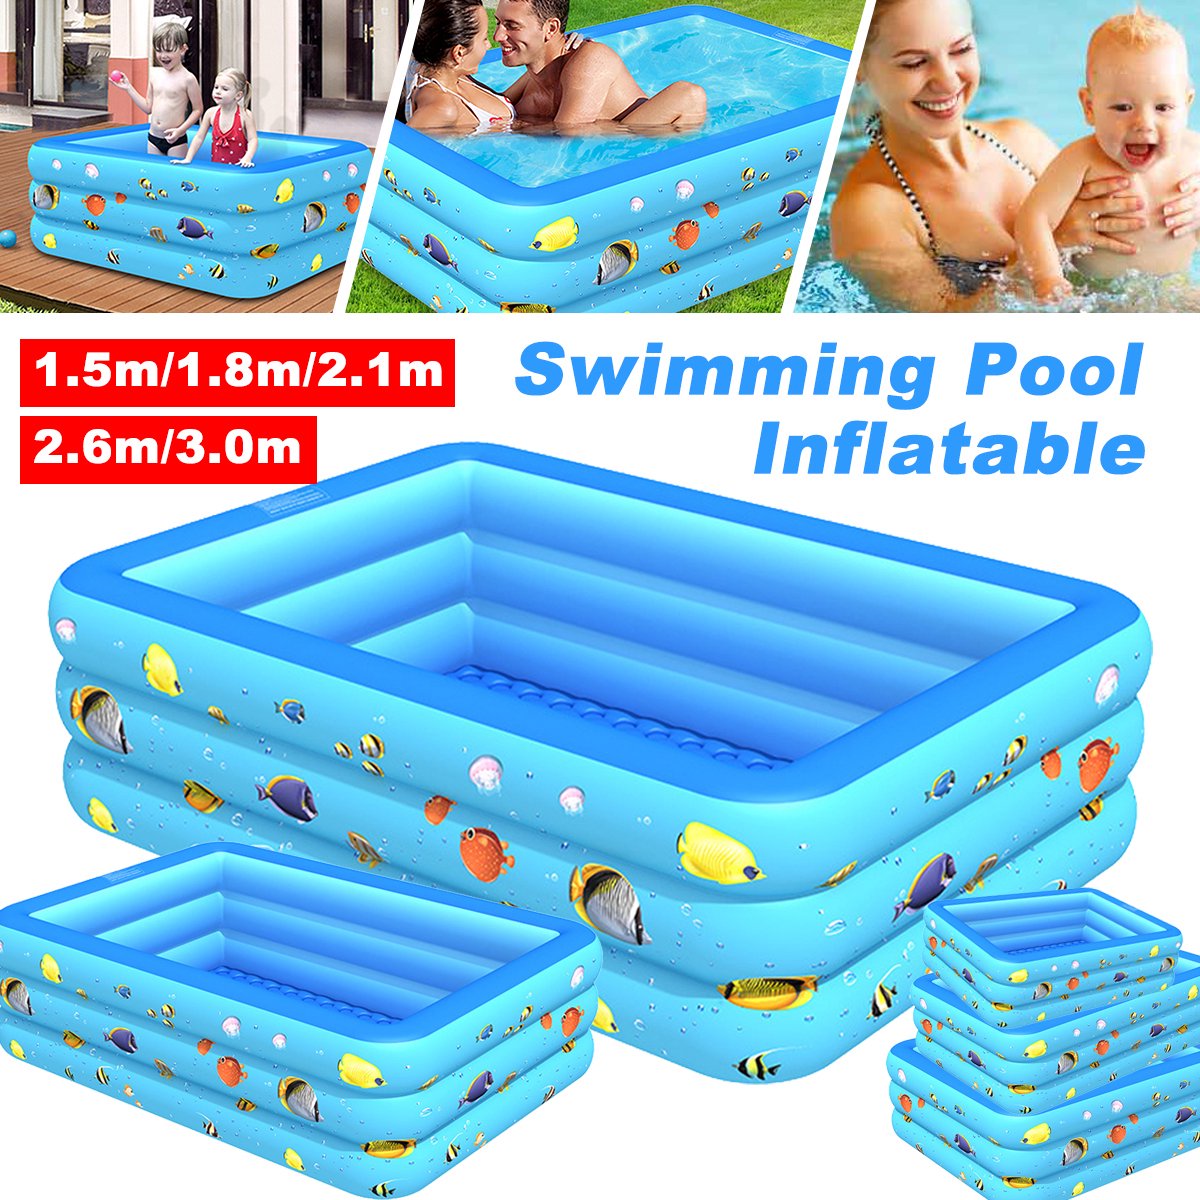 Coolike-Vierkant Opblaasbaar Zwembad-150x110x50 cm-Opblaasbare zwembaden-Familiebad- Kinderzwembad-Opblaaszwembad-blauw